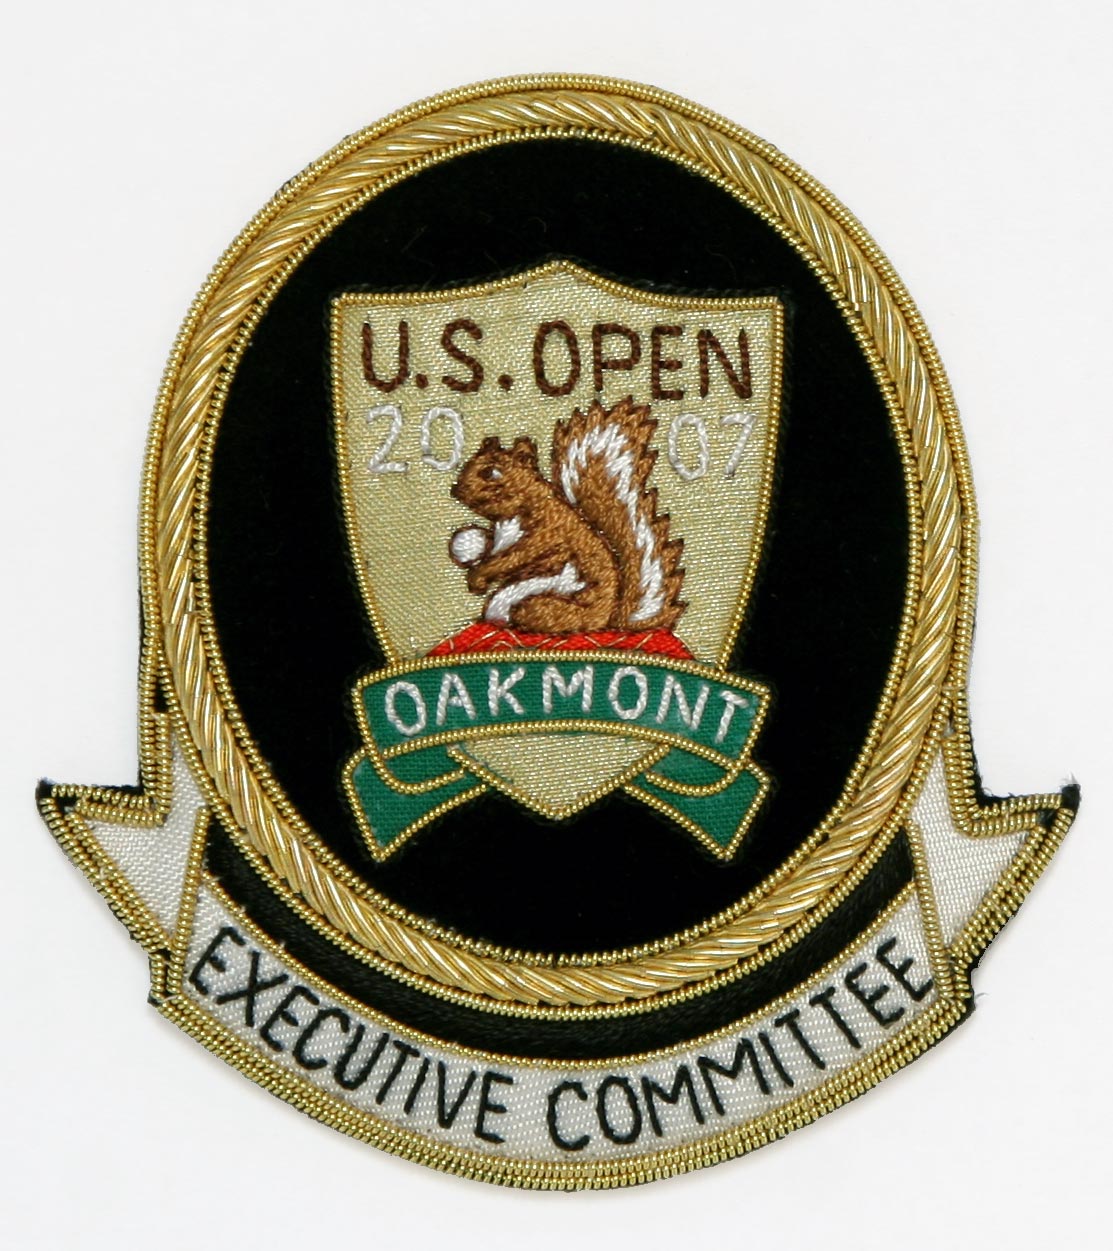 US Open Oakmont